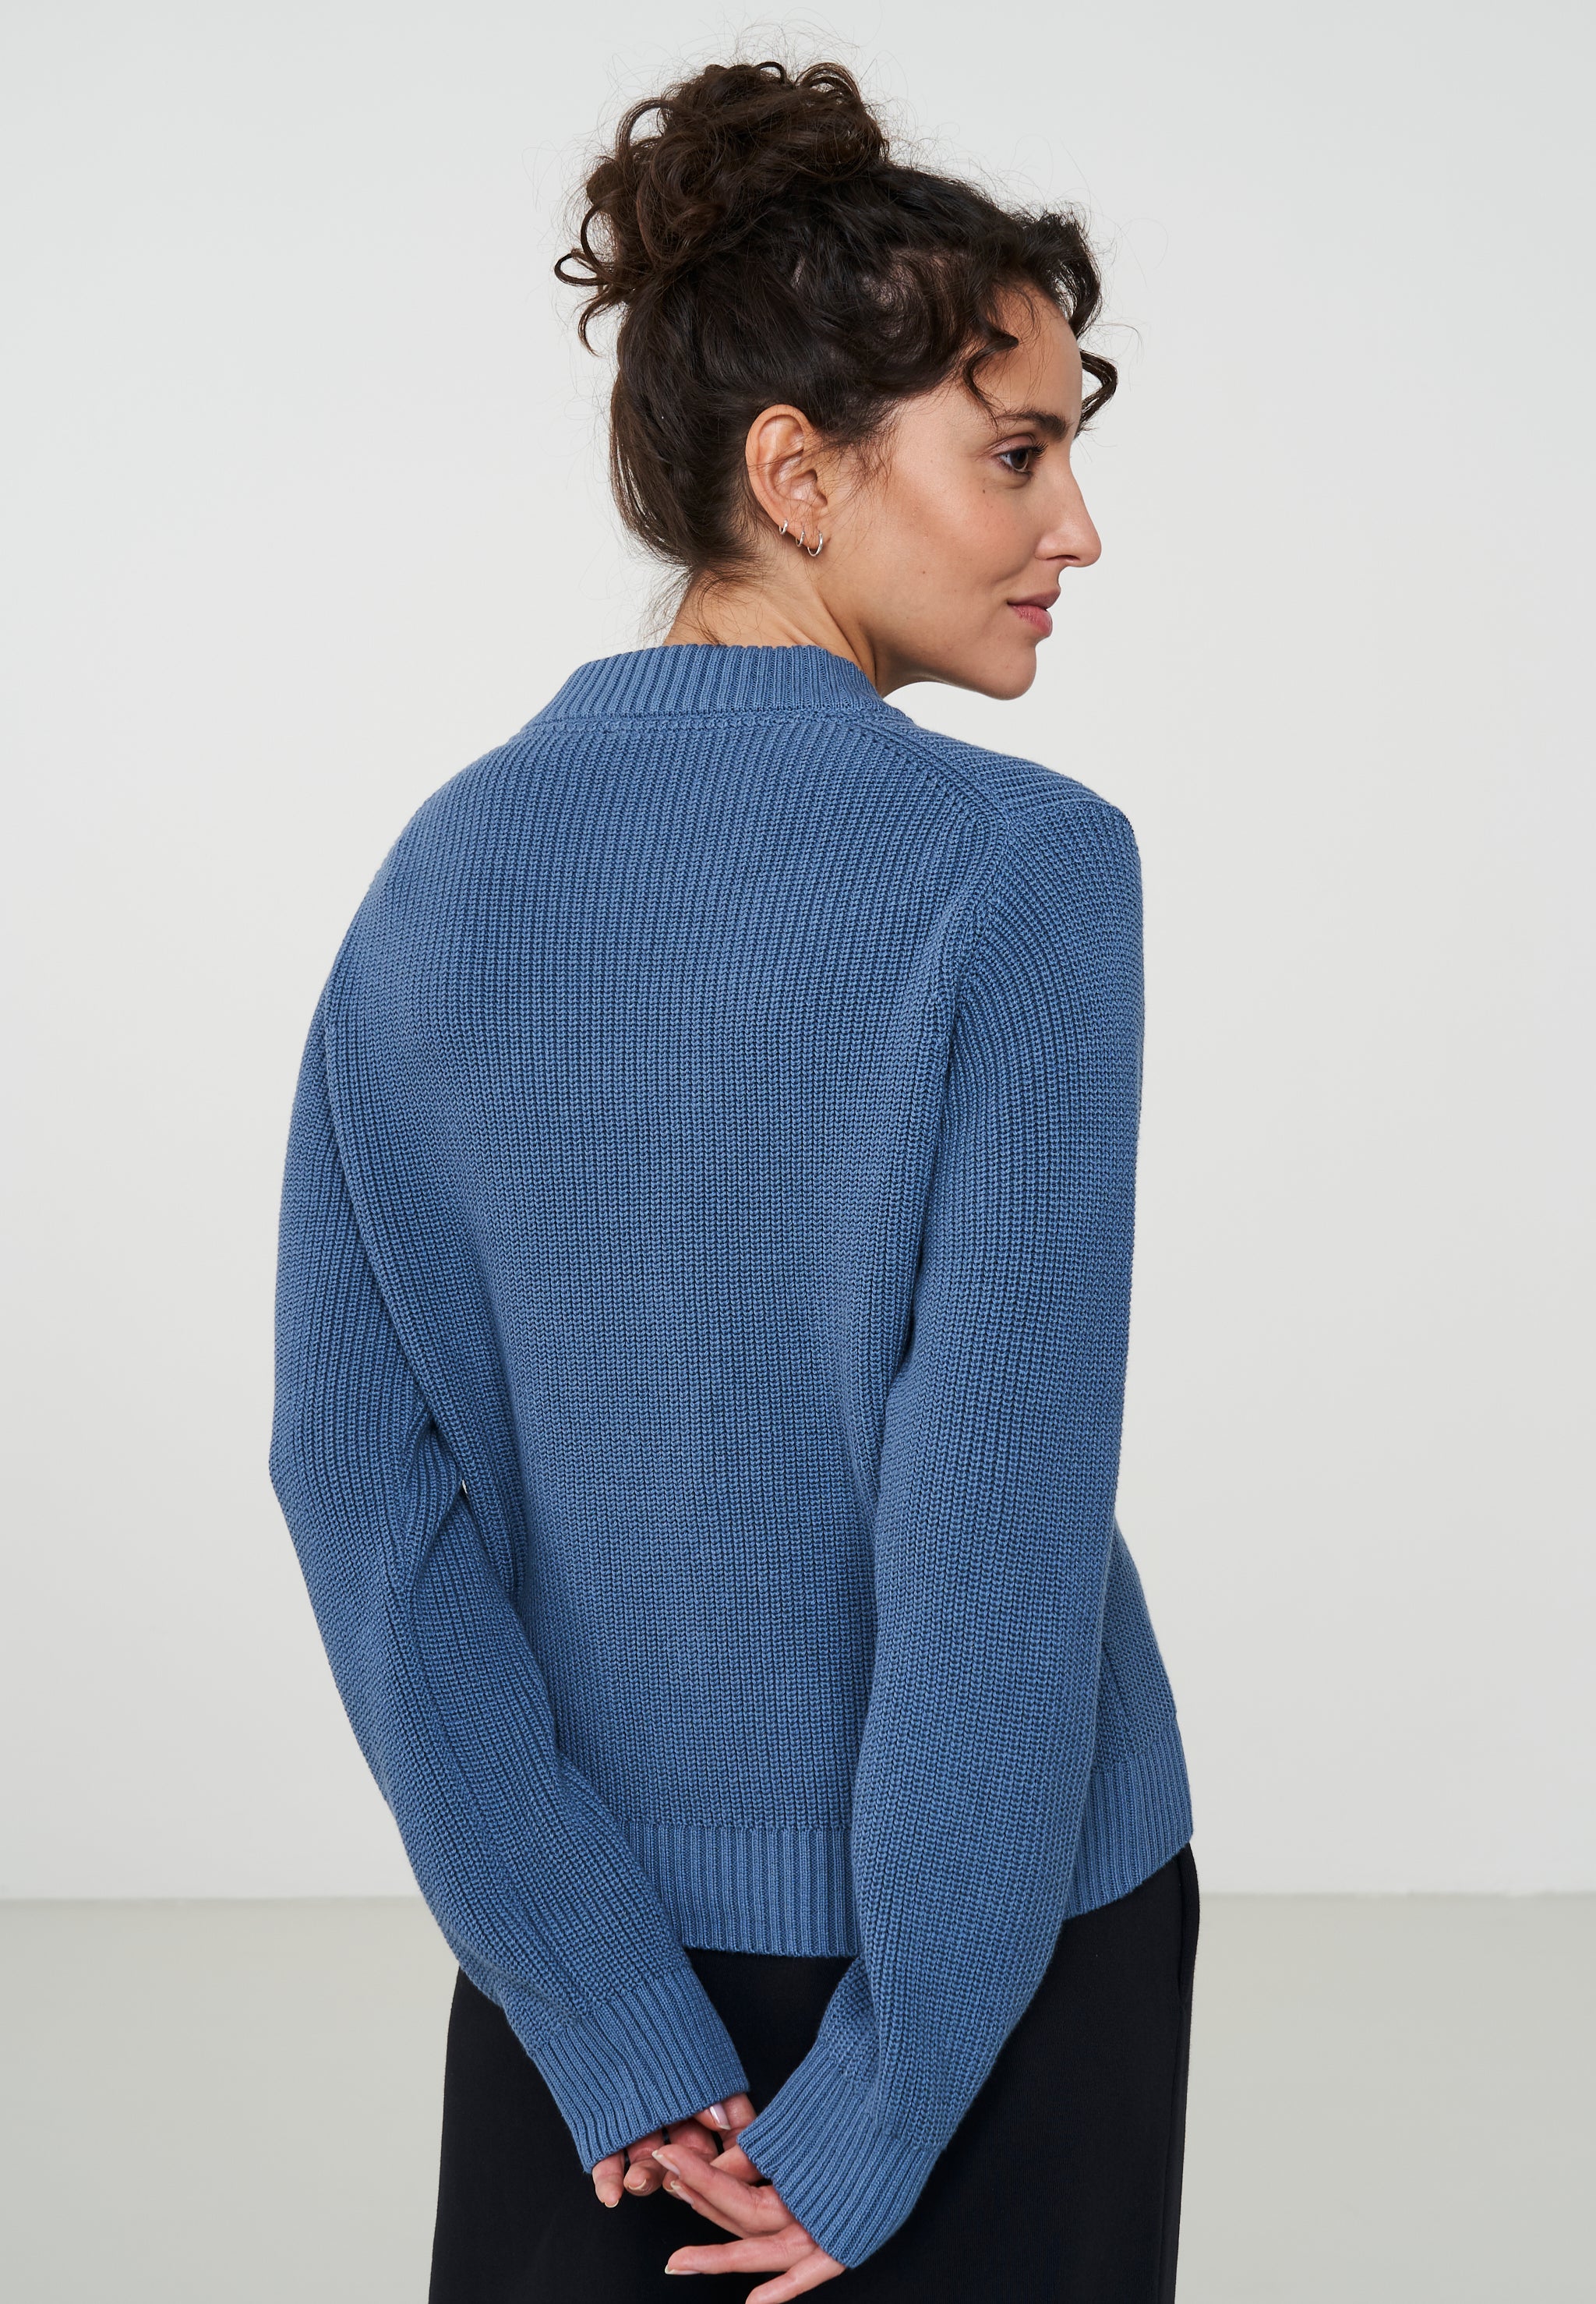 sweater macrozamia smoke blue